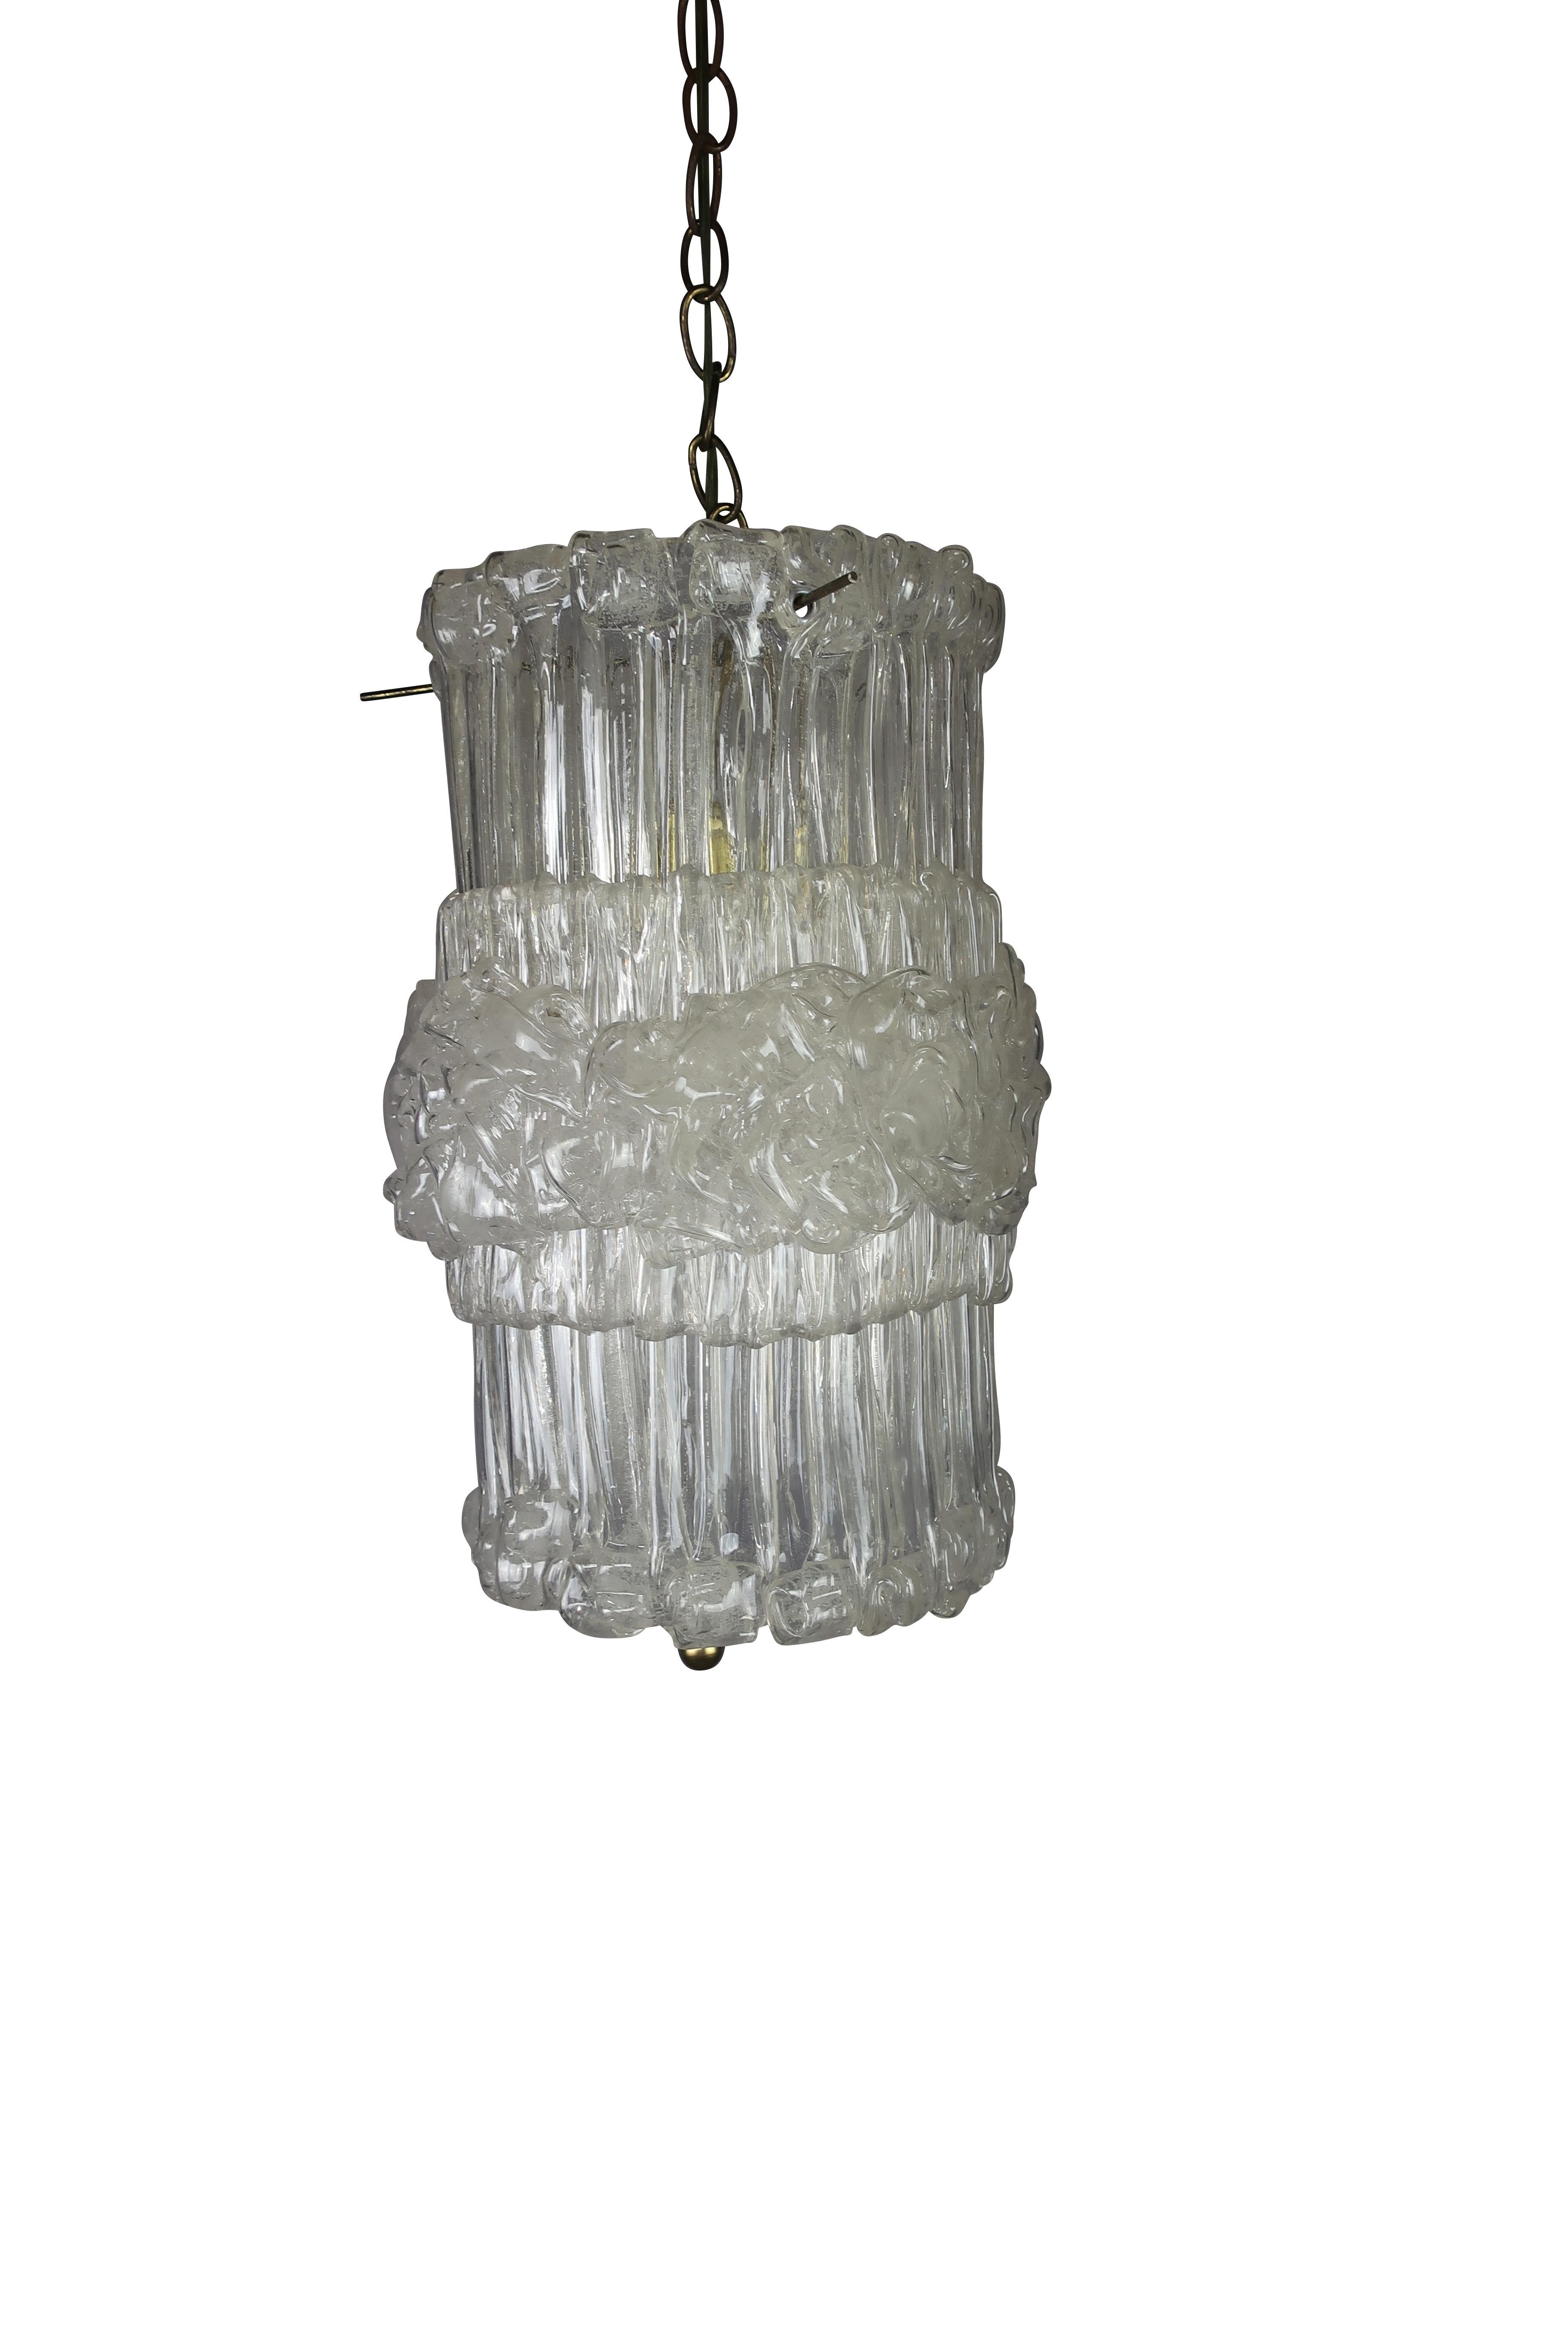 Mid-Century Lucite/ acrylic vintage hanging pendant lights, circa 1950.